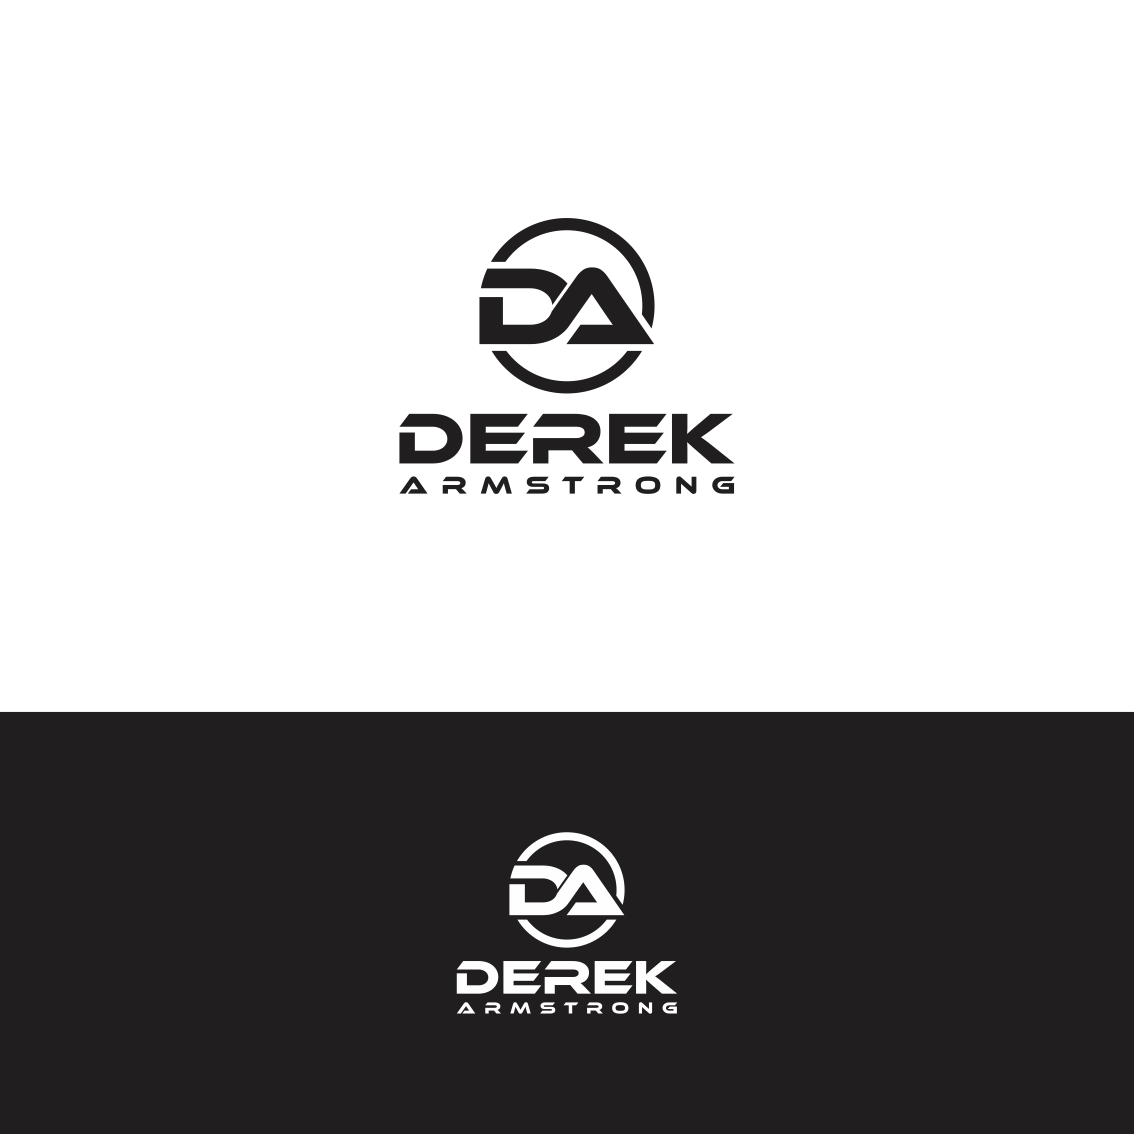 Derek Logo - DesignContest - Derek Armstrong derek-armstrong